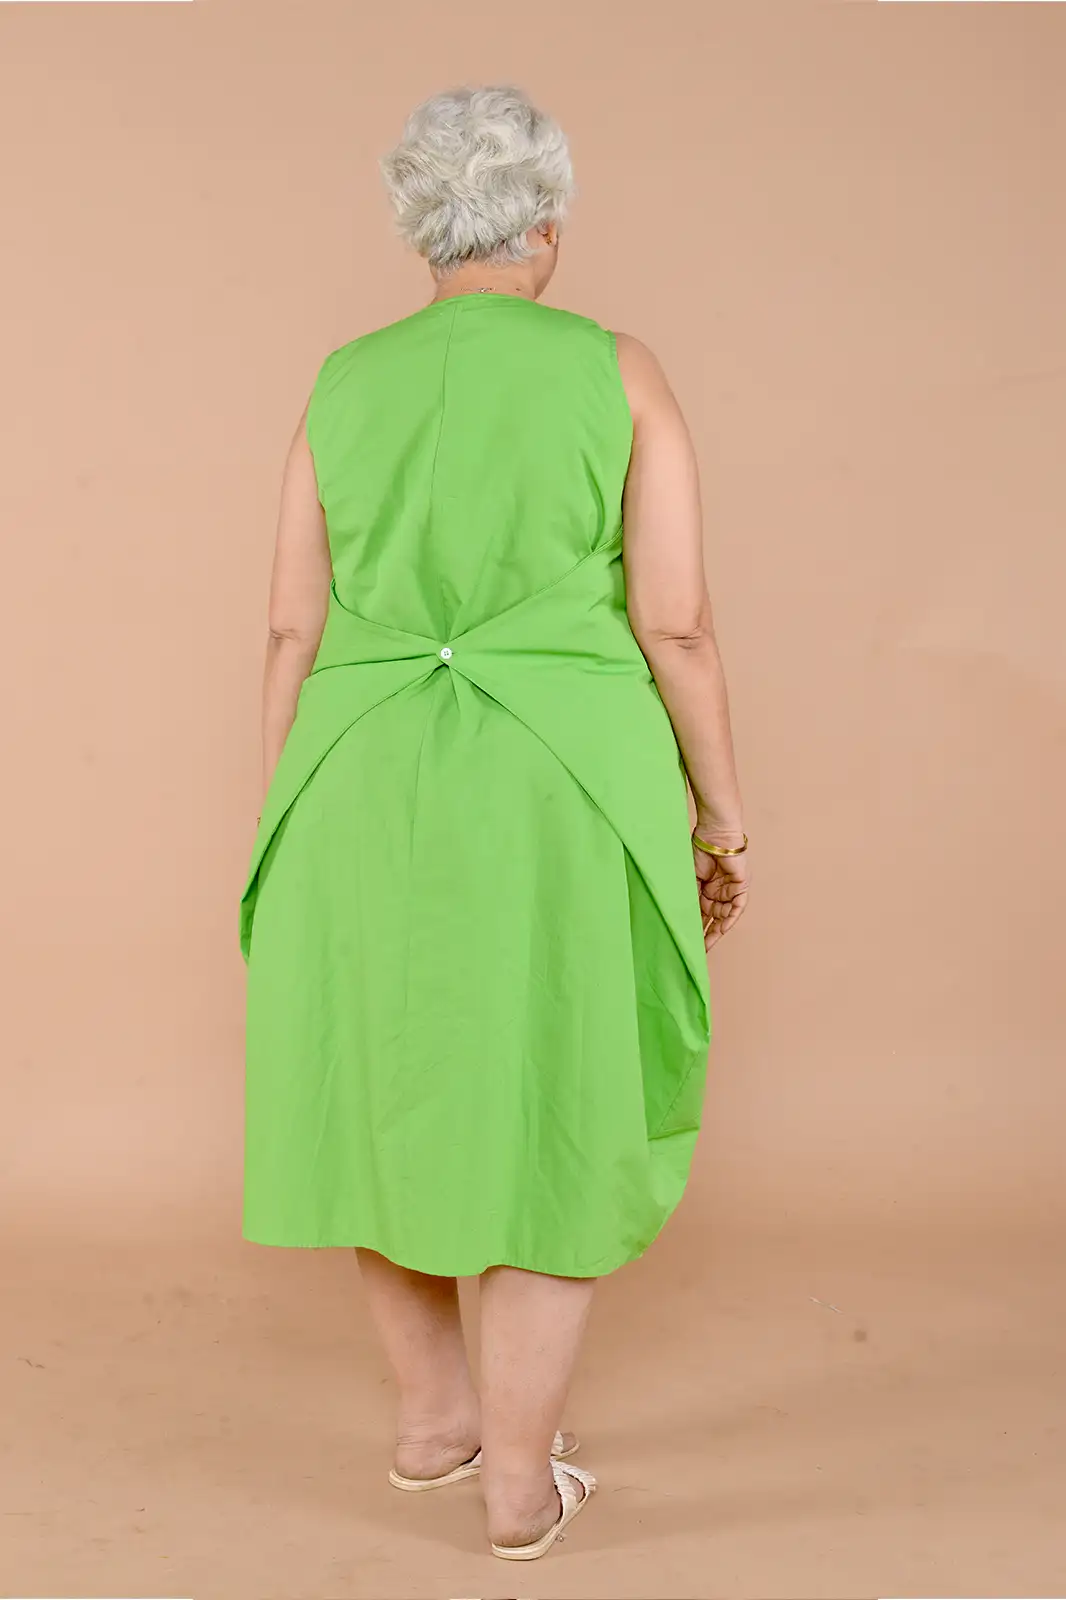 ahana sleevless oversized dress green, oversized dress, oversized dress for women, oversized dress outfit, organic clothing, party wear dress women